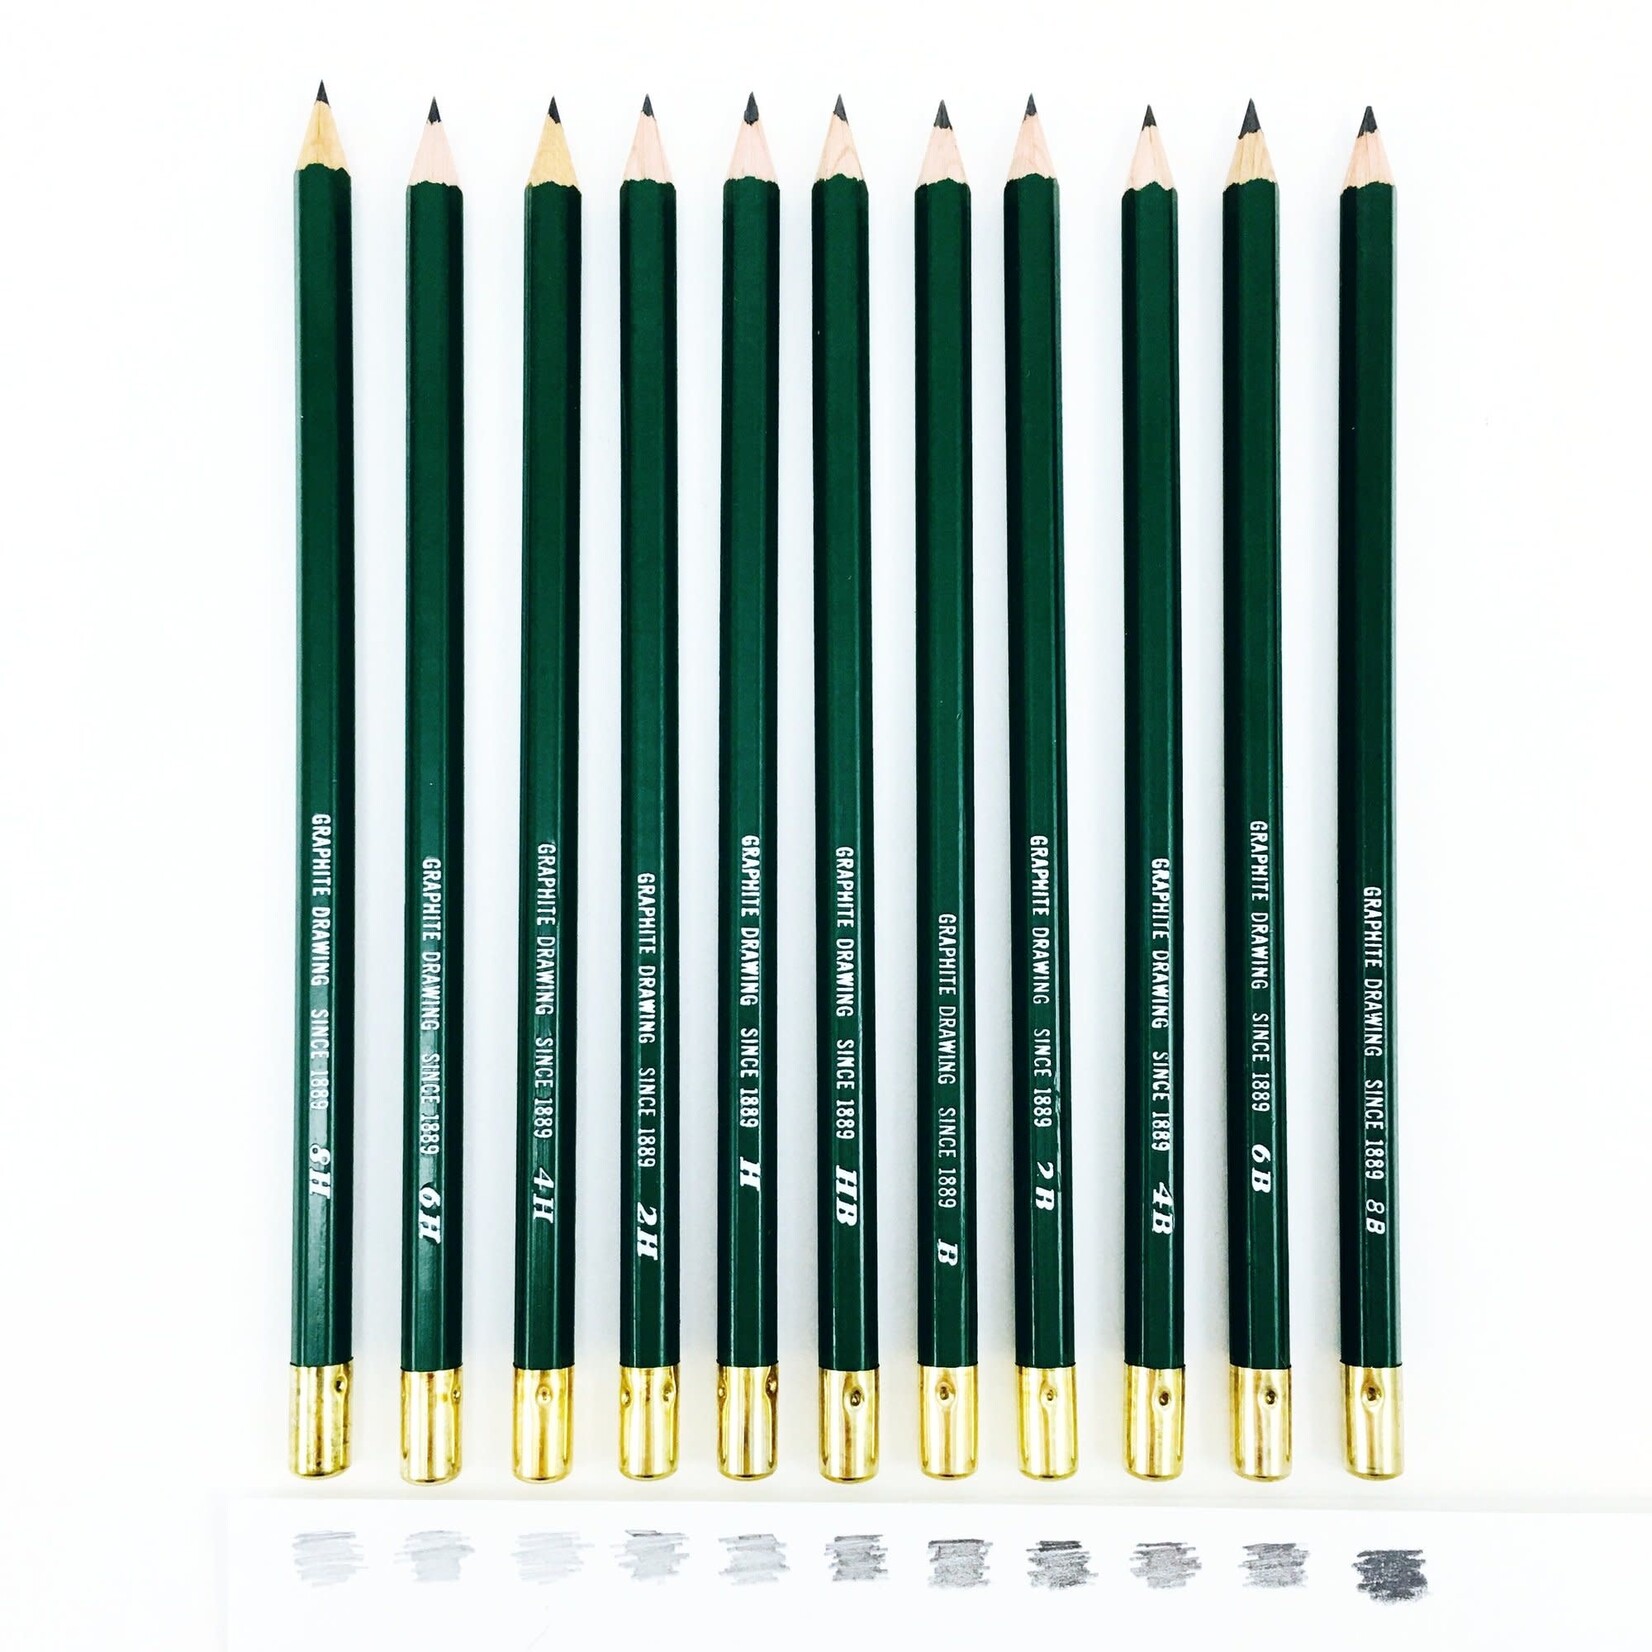 General Pencil Kimberly Graphite Pencil 6B